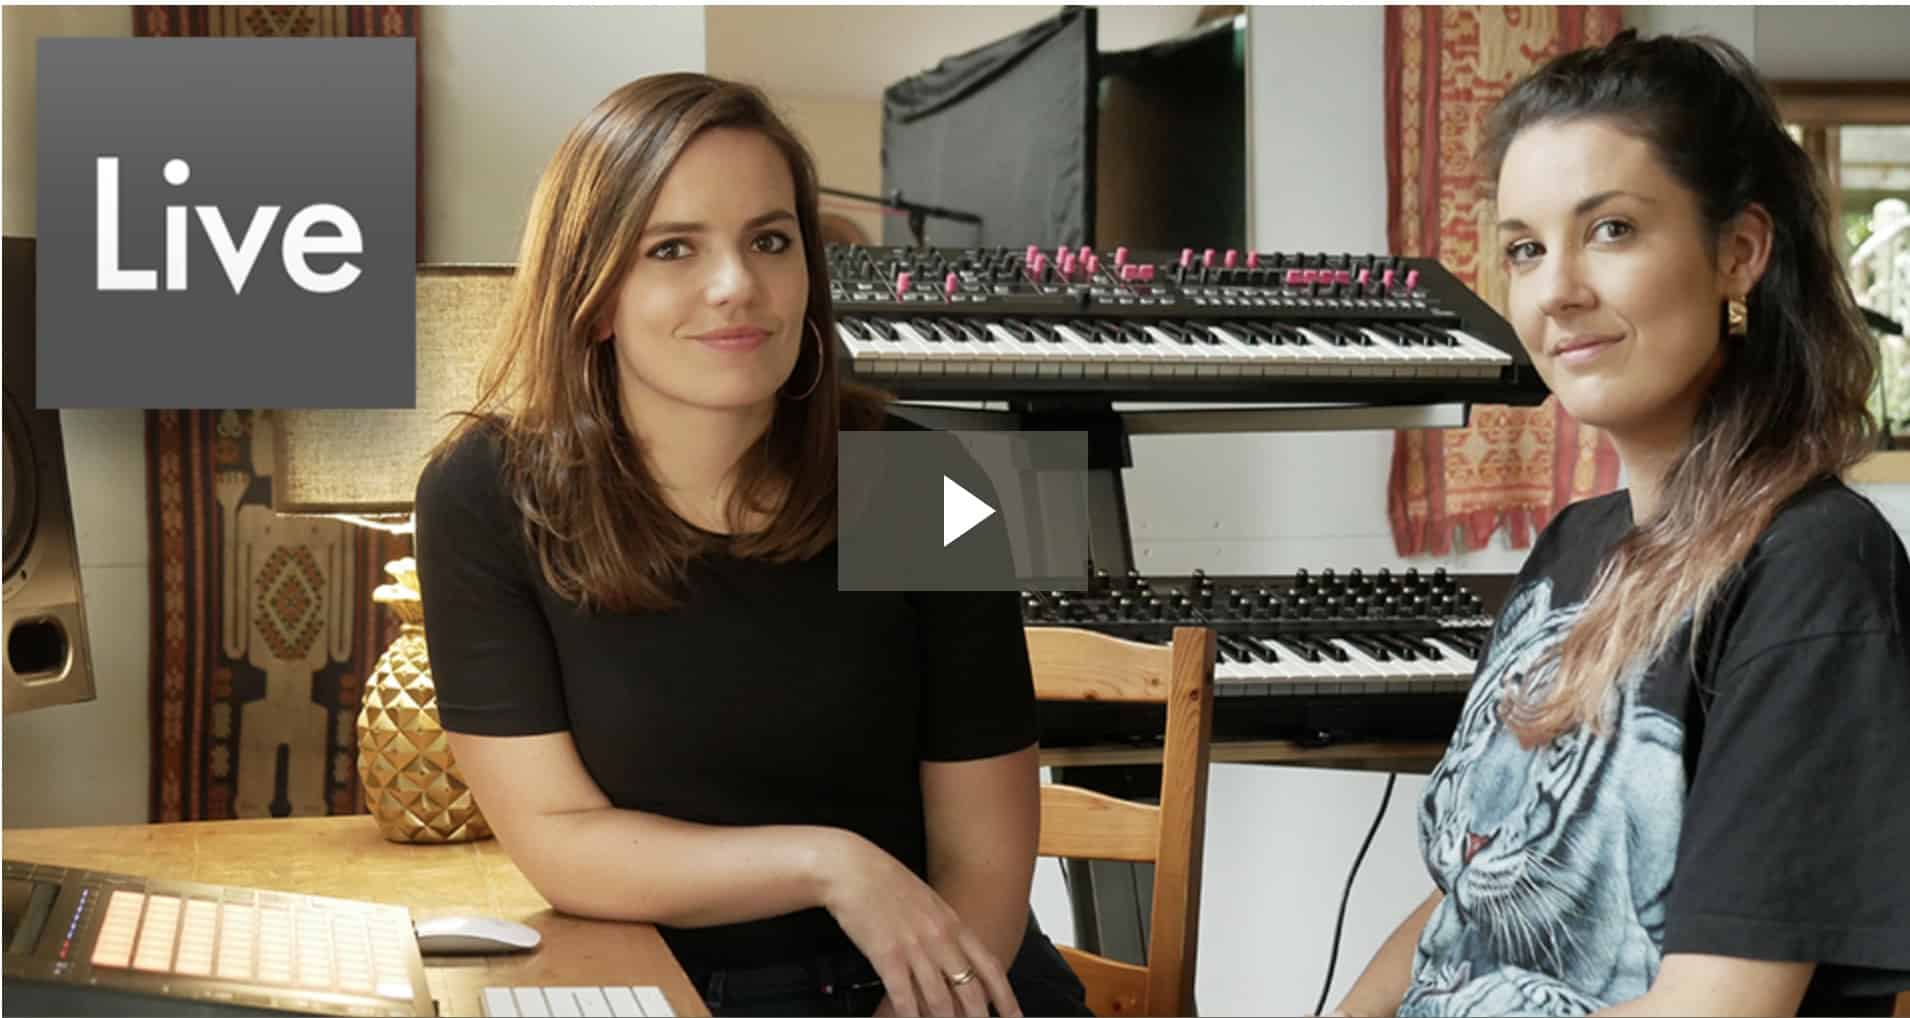 Rachel K Collier Teaches HOW TO PRODUCE MUSIC WITH ABLETON LIVE